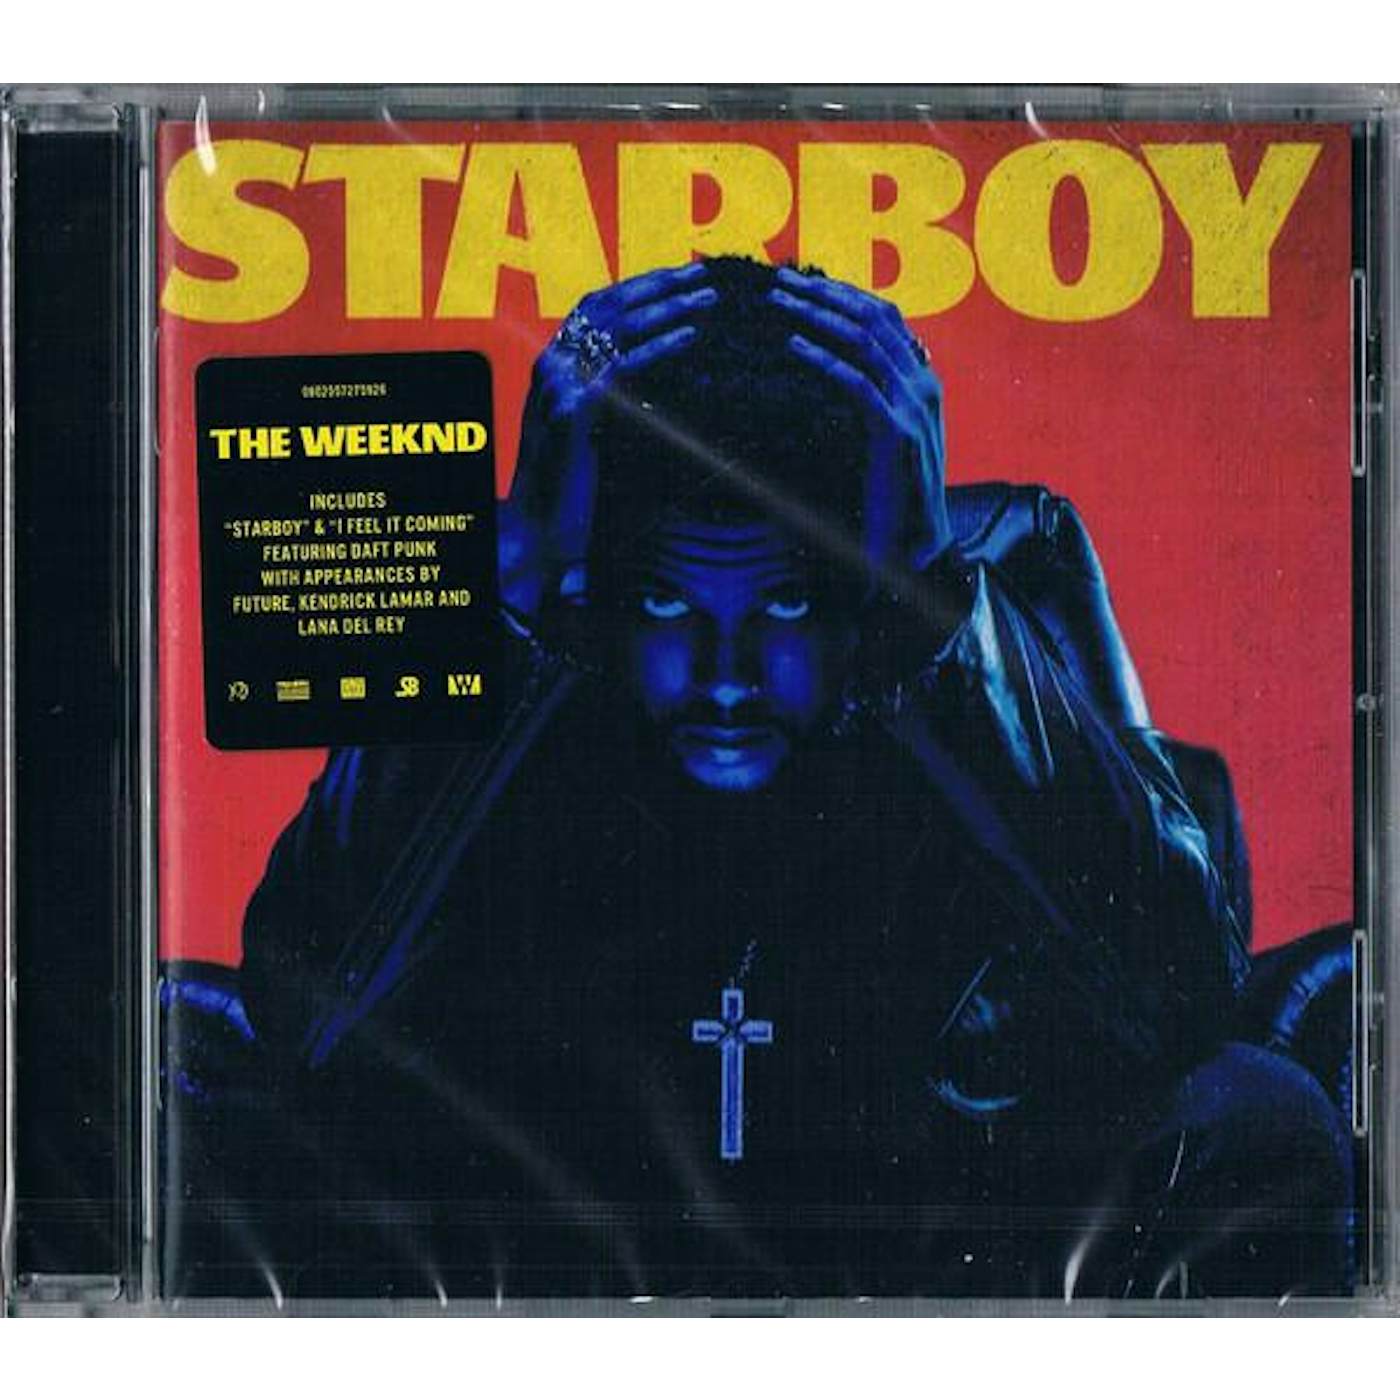 Star boy the weekend. Starboy the Weeknd обложка. The Weeknd "Starboy, CD". Обложка на альбом музыкальный the Weeknd. Starboy обложка альбома.